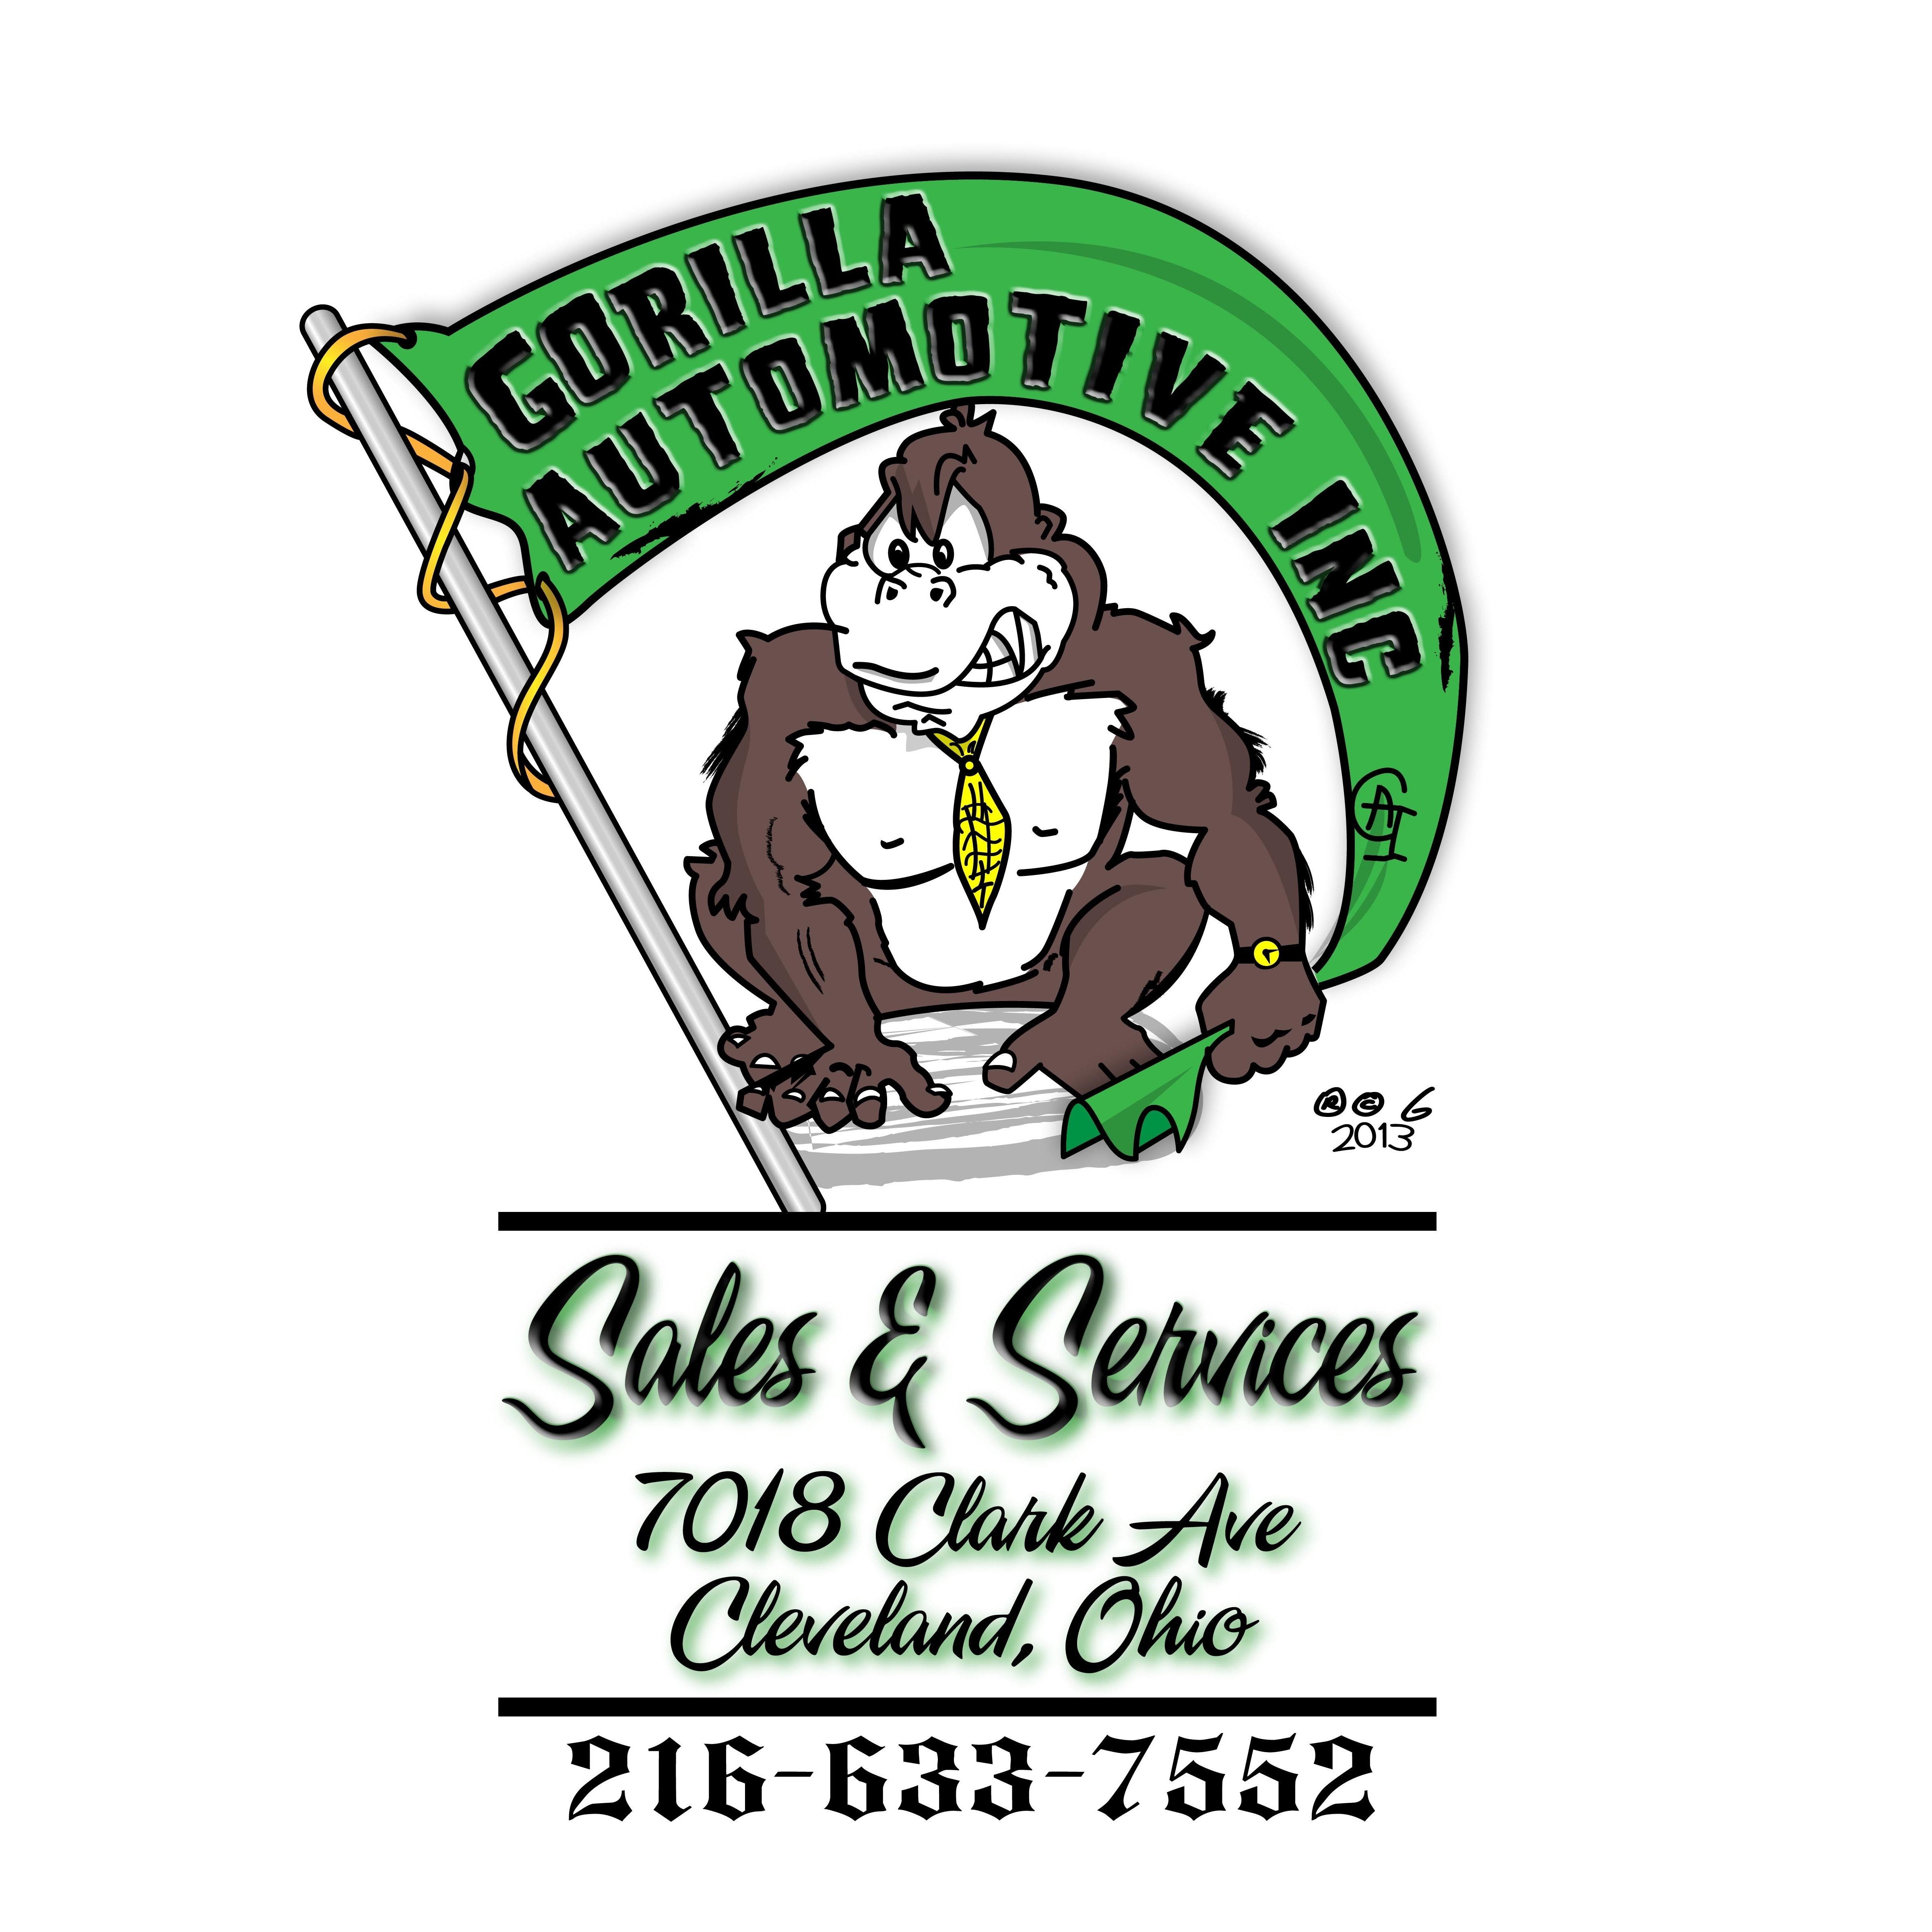 Gorilla Automotive Inc / Sales & Services